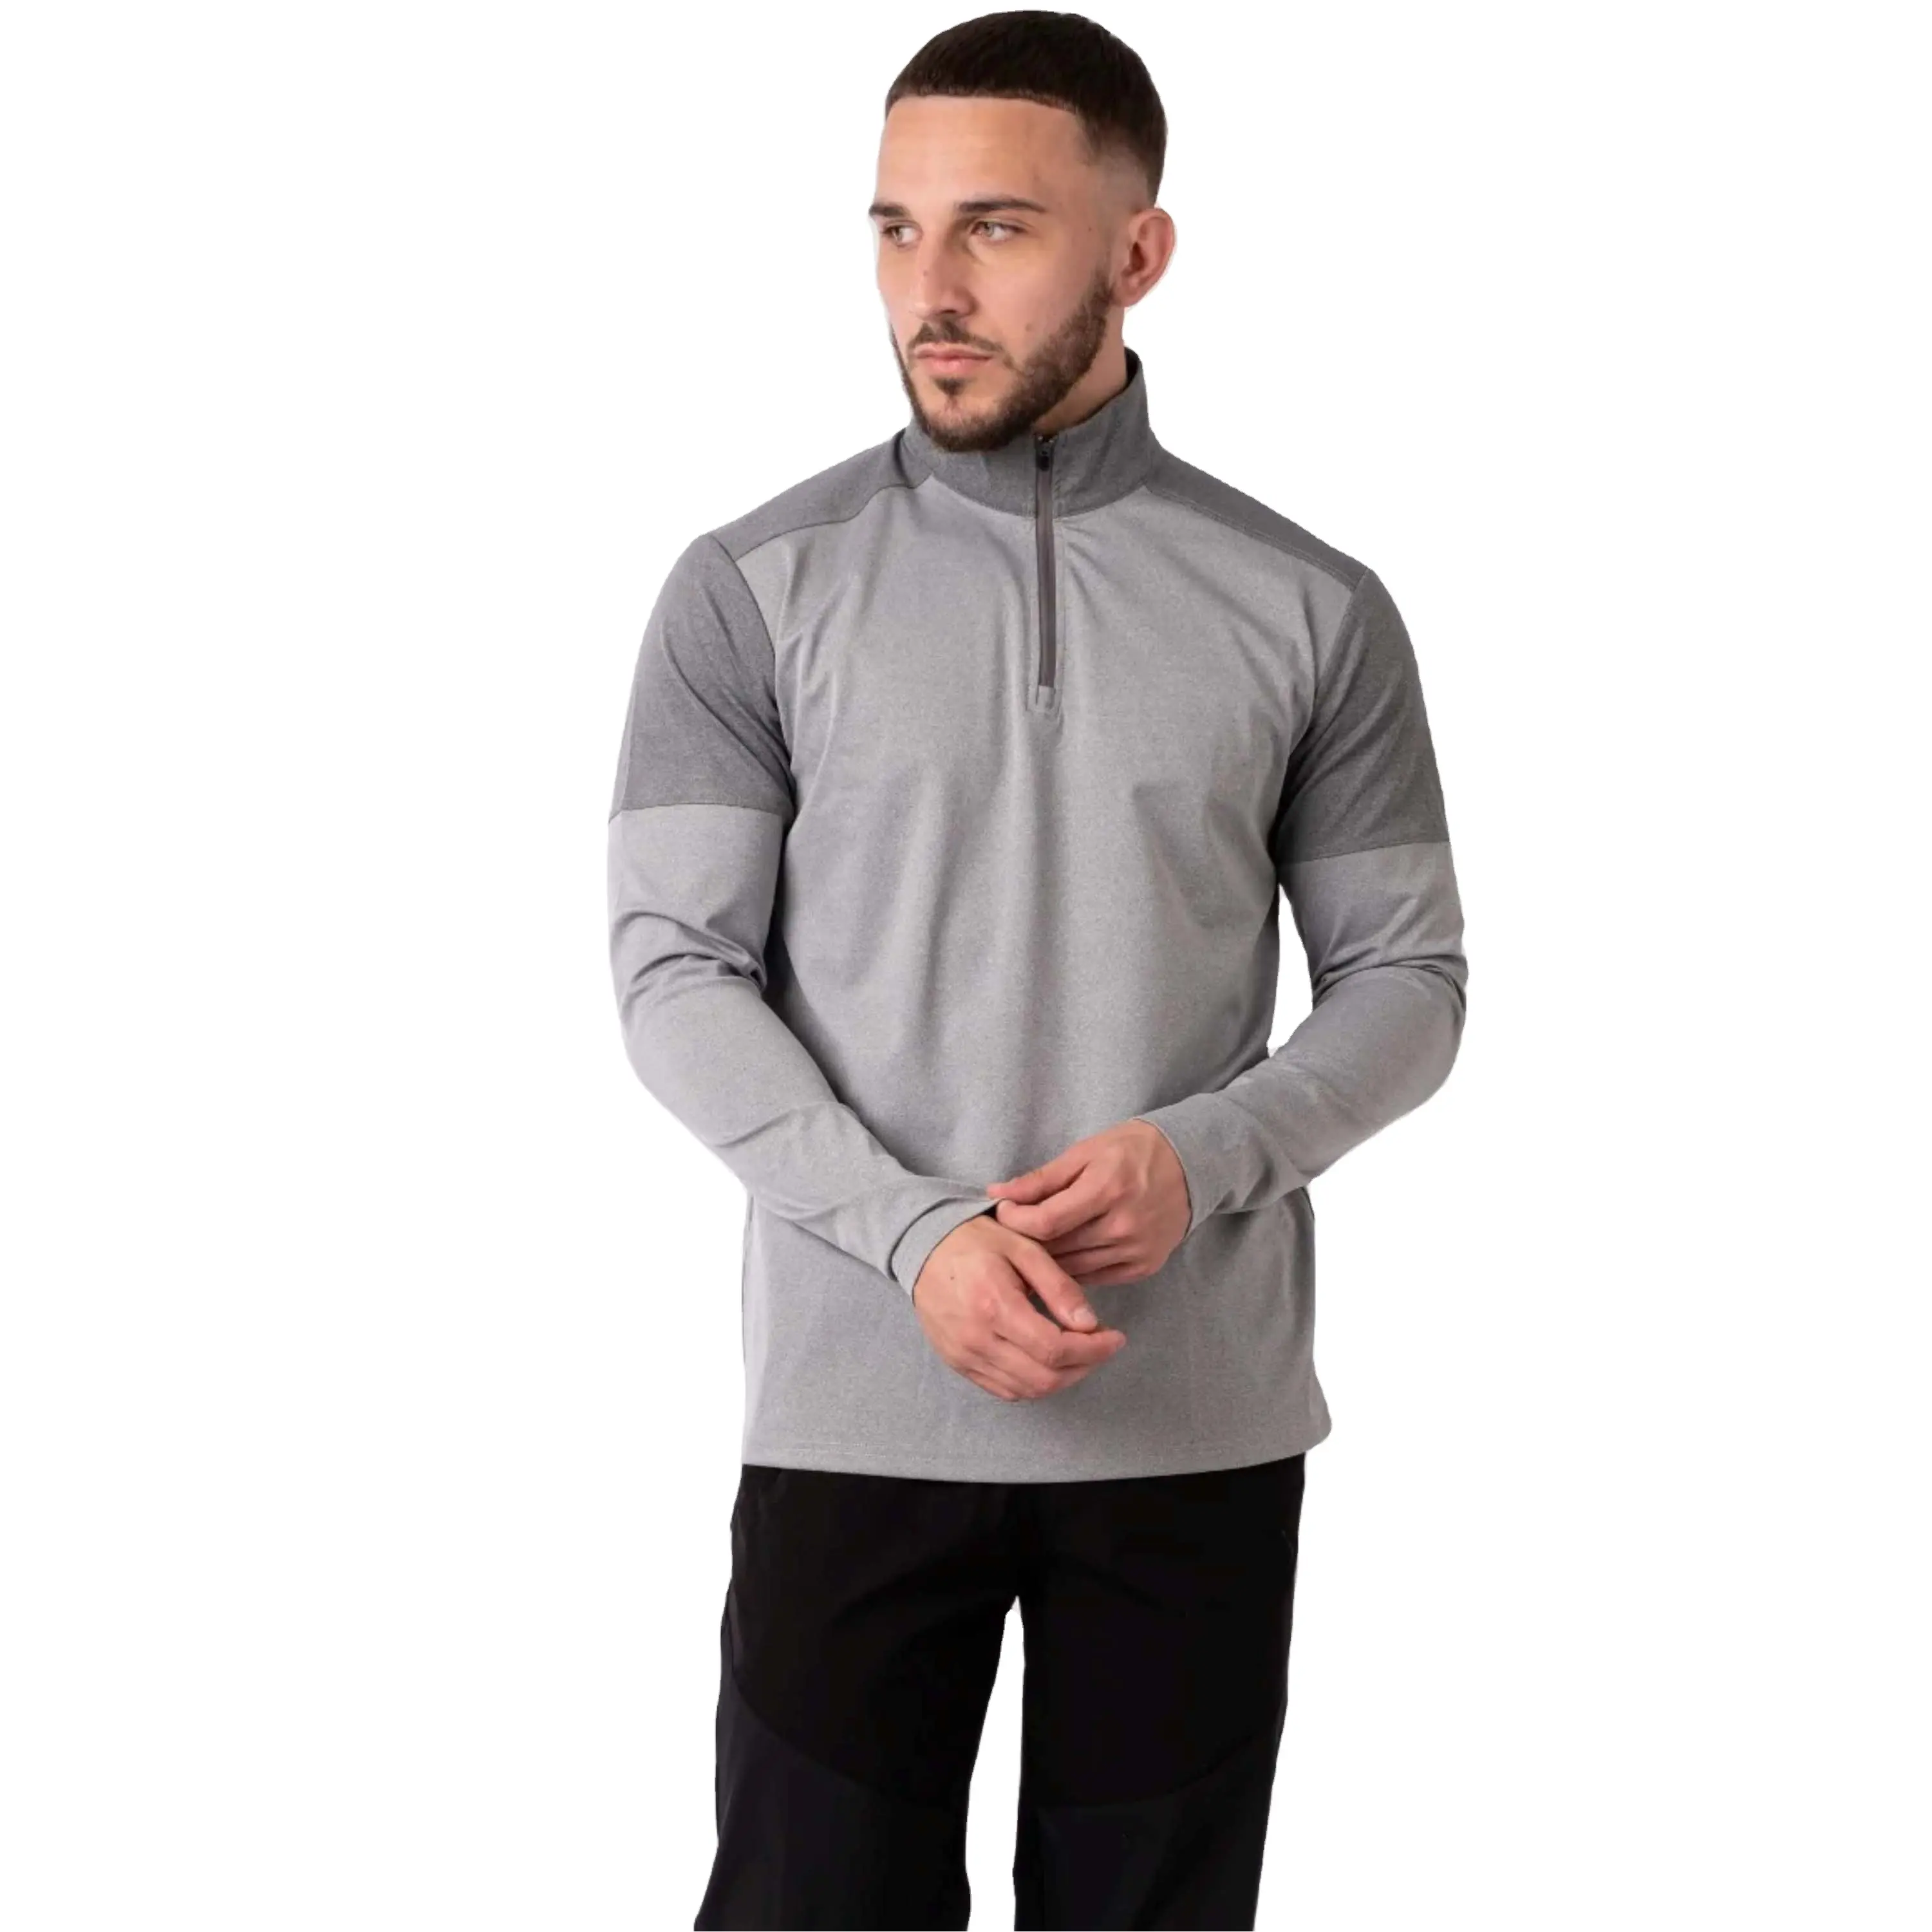 OEM custom quick dry gym 1/4 quarter zip top fitness t-shirts golf shirts sportswear long sleeves men's jogging shirt for men